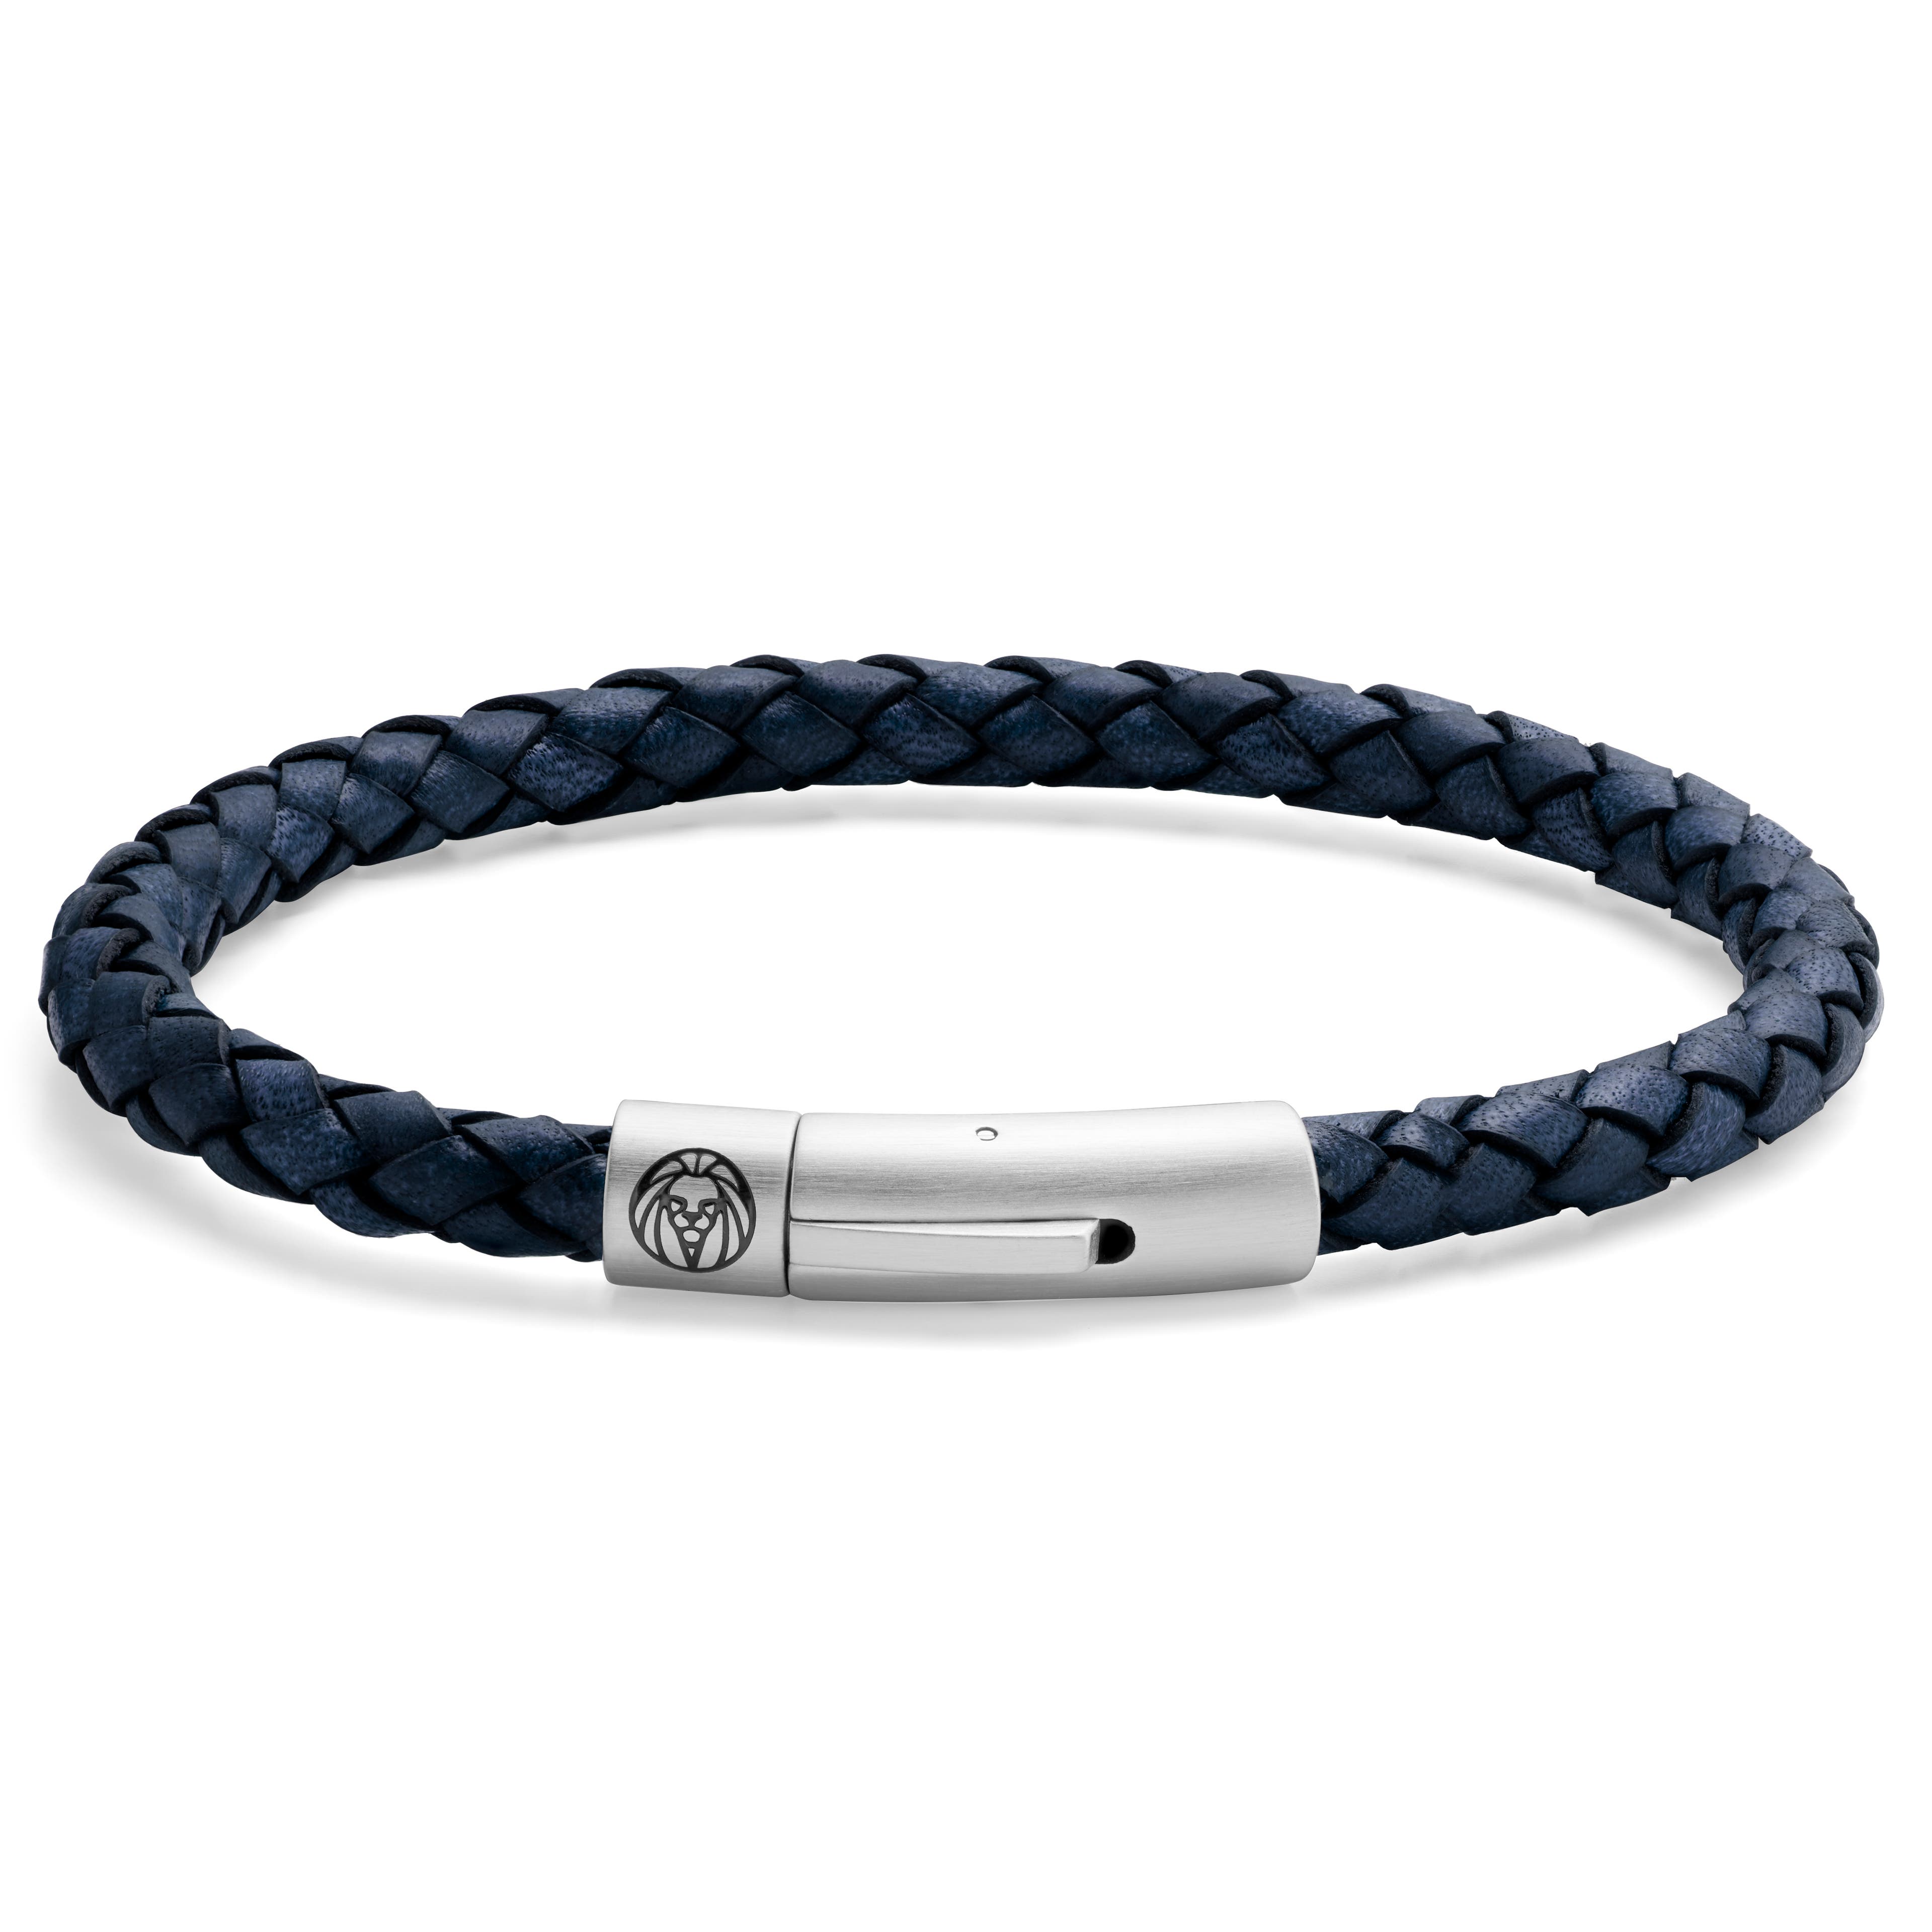 Blue Bolo Leather Bracelet